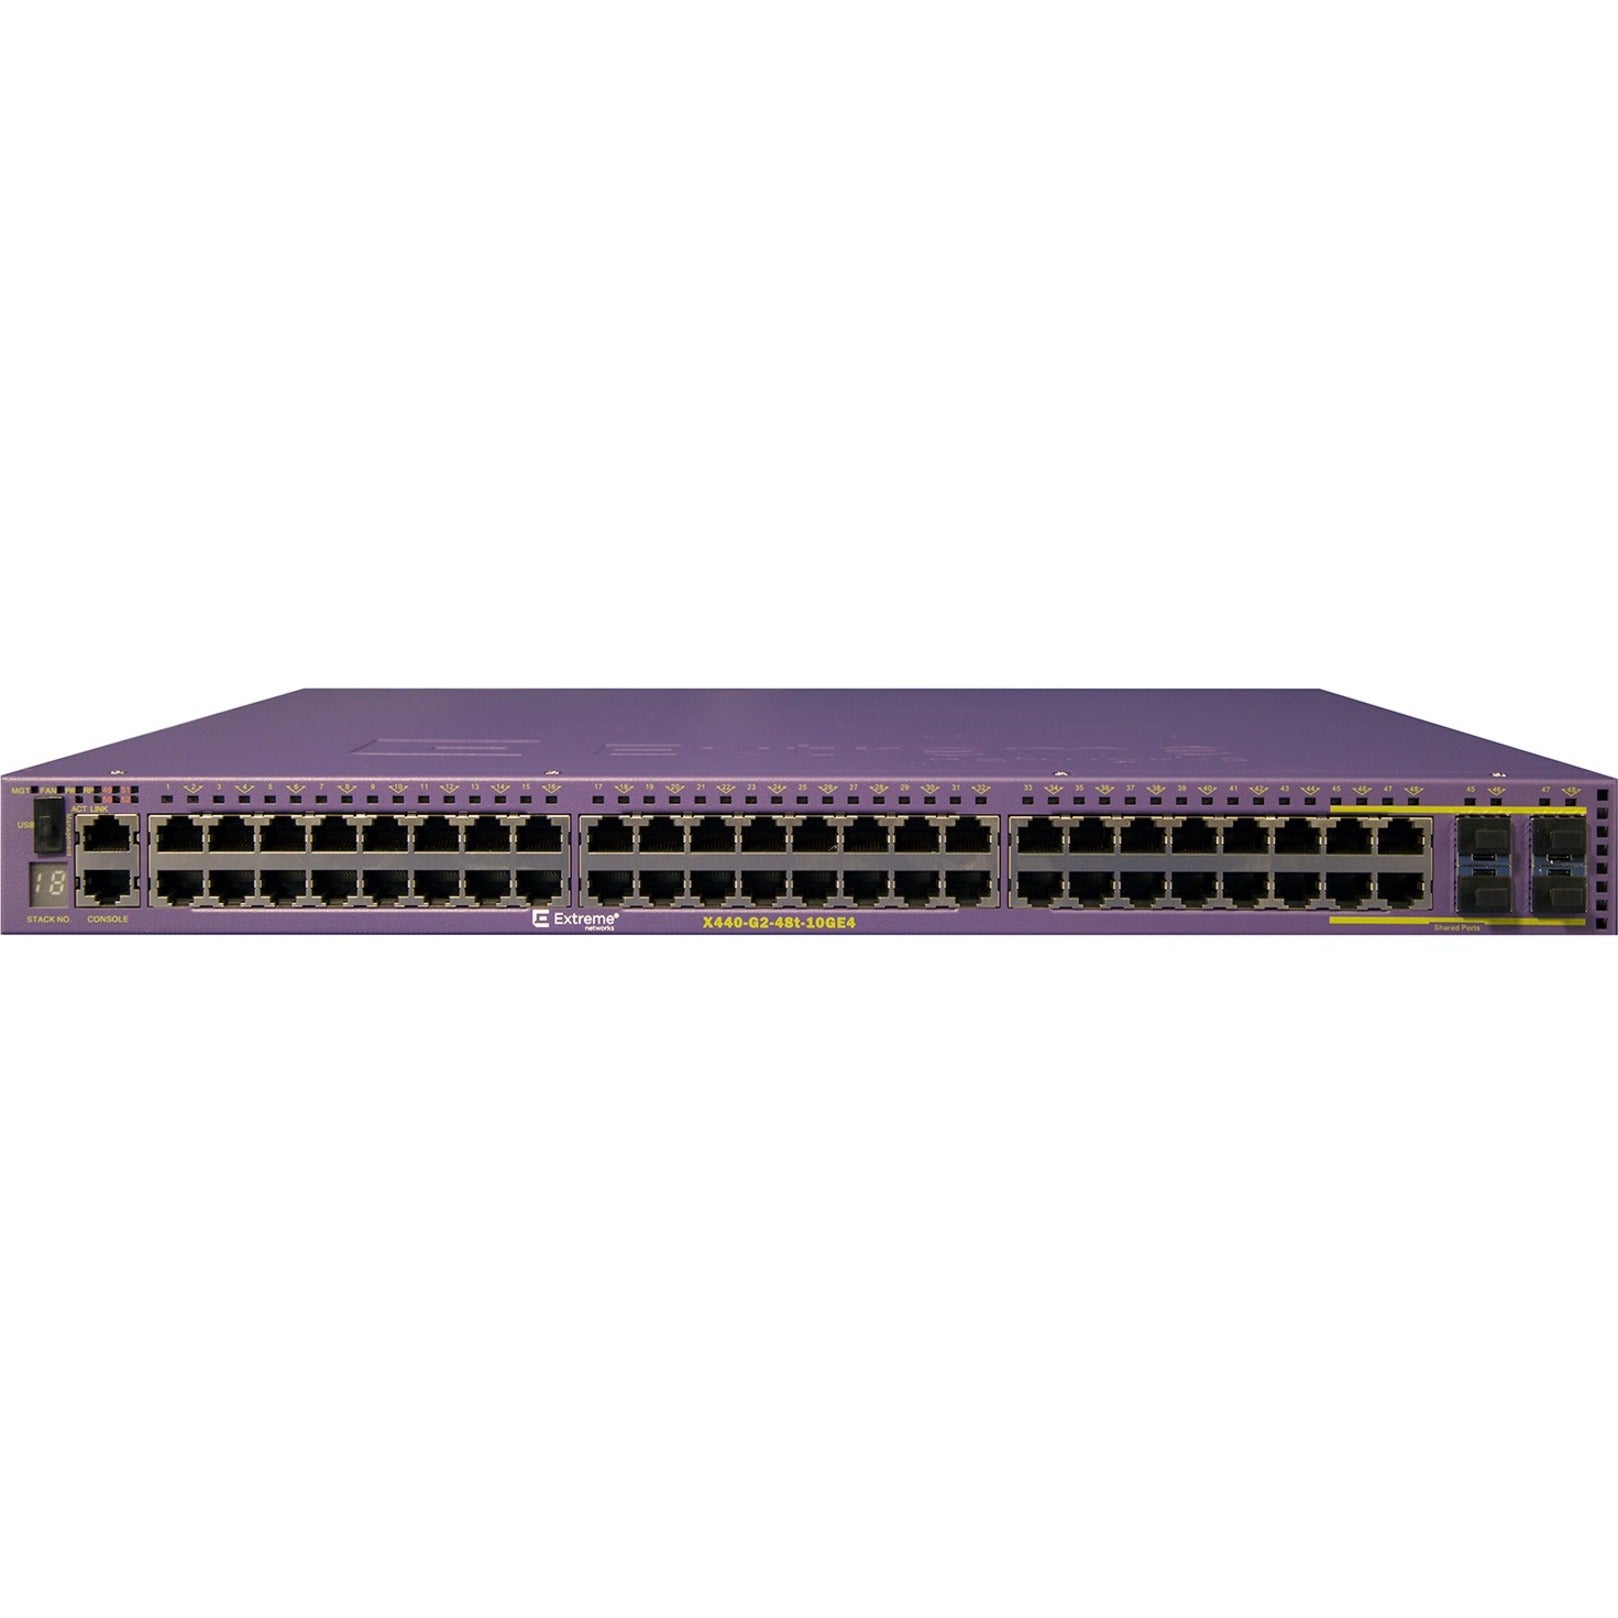 Extreme Networks 16534 X440-G2-48t-10GE4 Ethernet Switch Gigabit Ethernet 48 Network Ports Vid portnätverk Extreme Networks 16534 X440-G2-48t-10GE4 Ethernet Switch Gigabit Ethernet 48 nätverksportar.